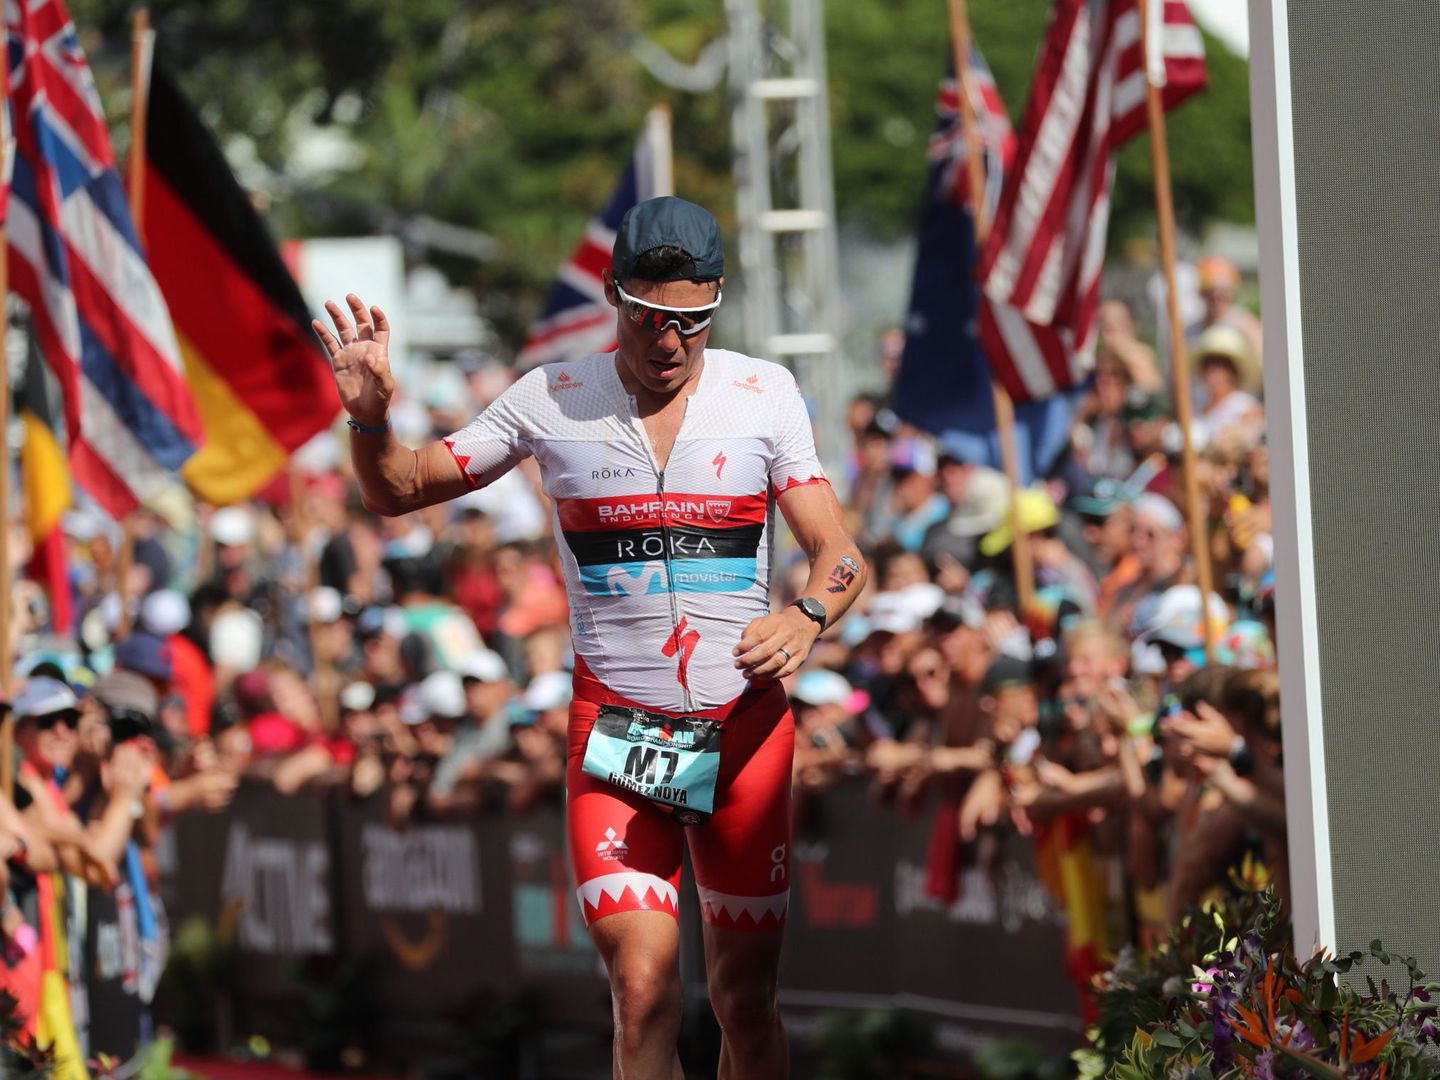 Gómez Noya cruza la línea de meta del Ironman de Hawái tras acabar undécimo. (Reuters)